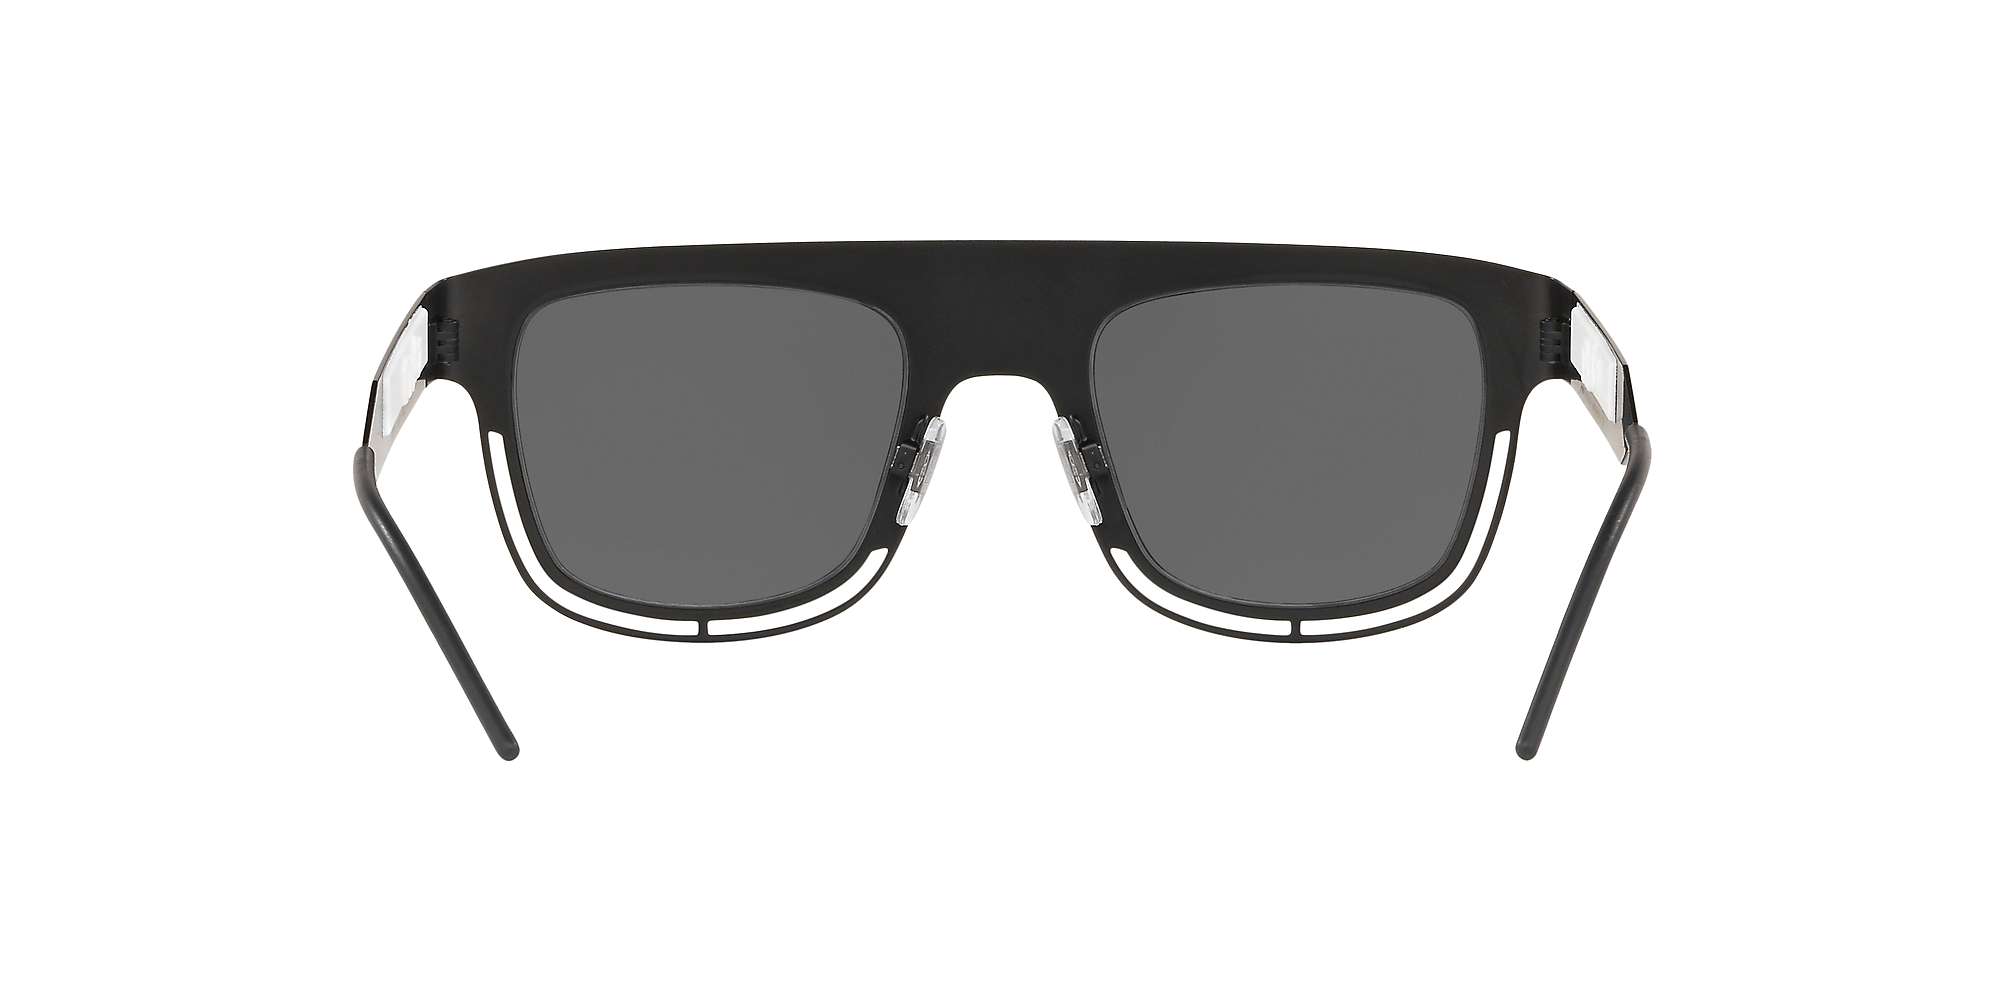 Buy Dolce & Gabbana DG2232 Men's Square Sunglasses, Black/Grey Online at johnlewis.com